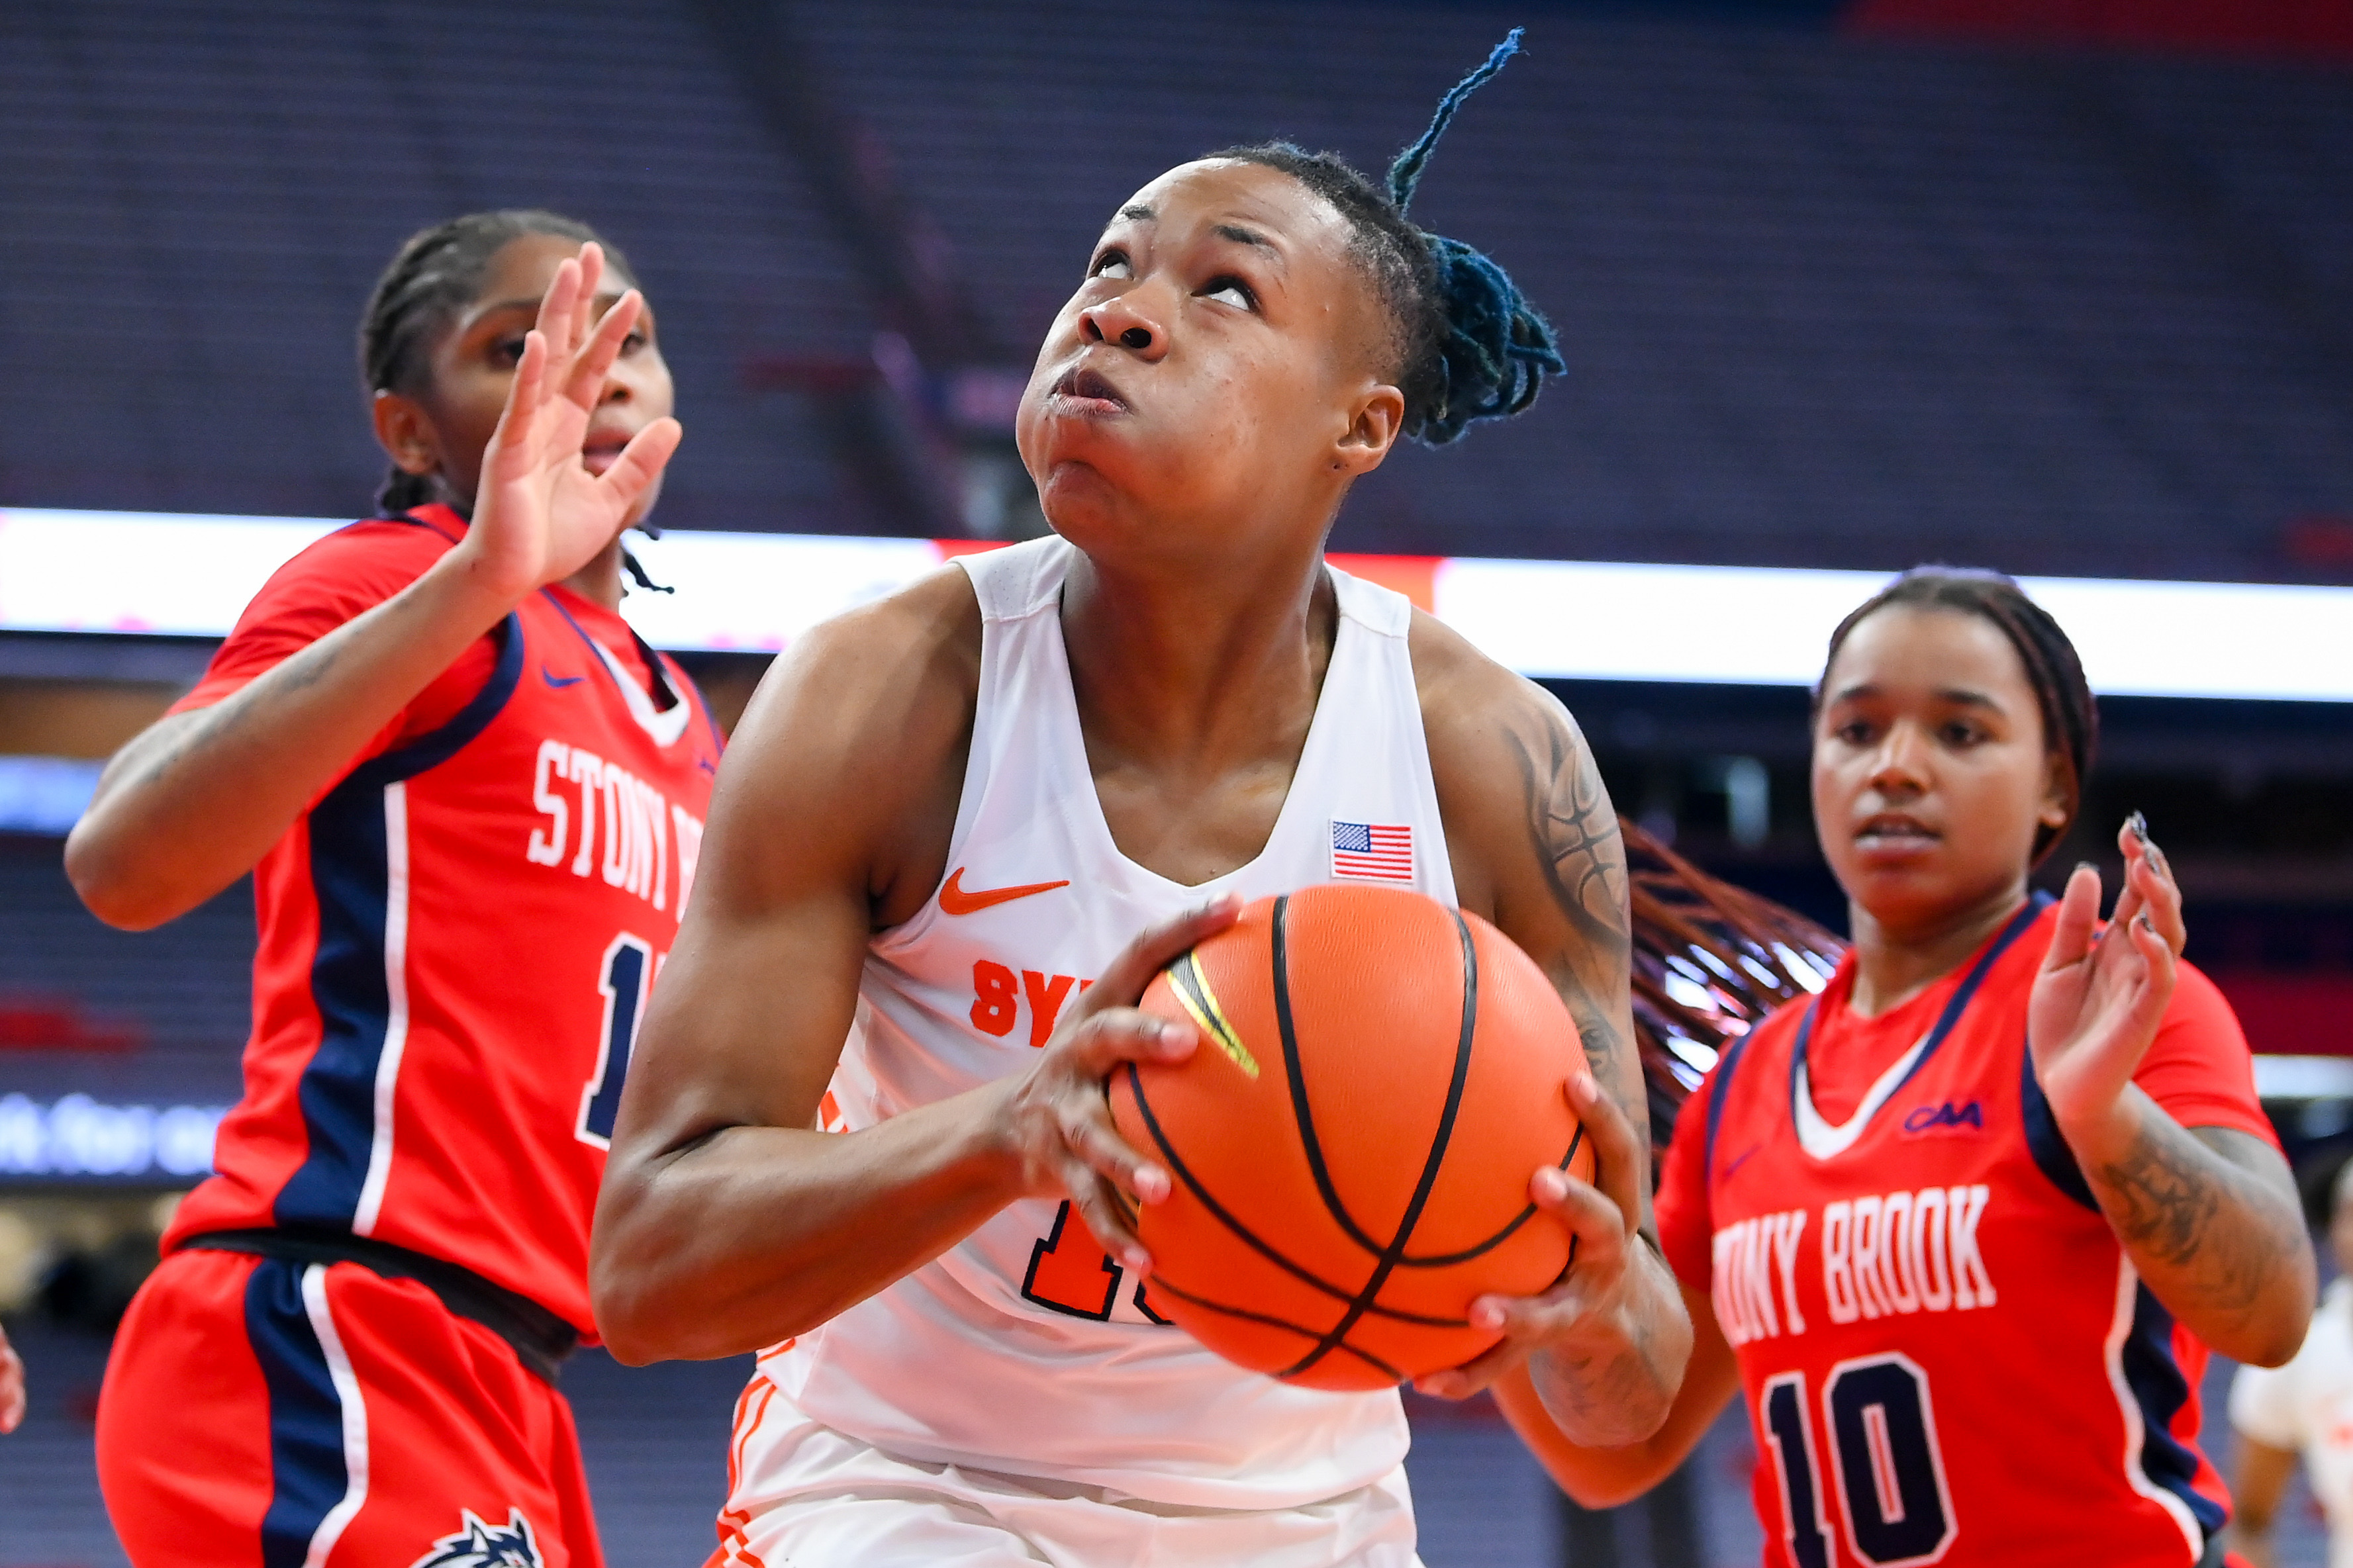 NCAA Womens Basketball: Stony Brook at Syracuse